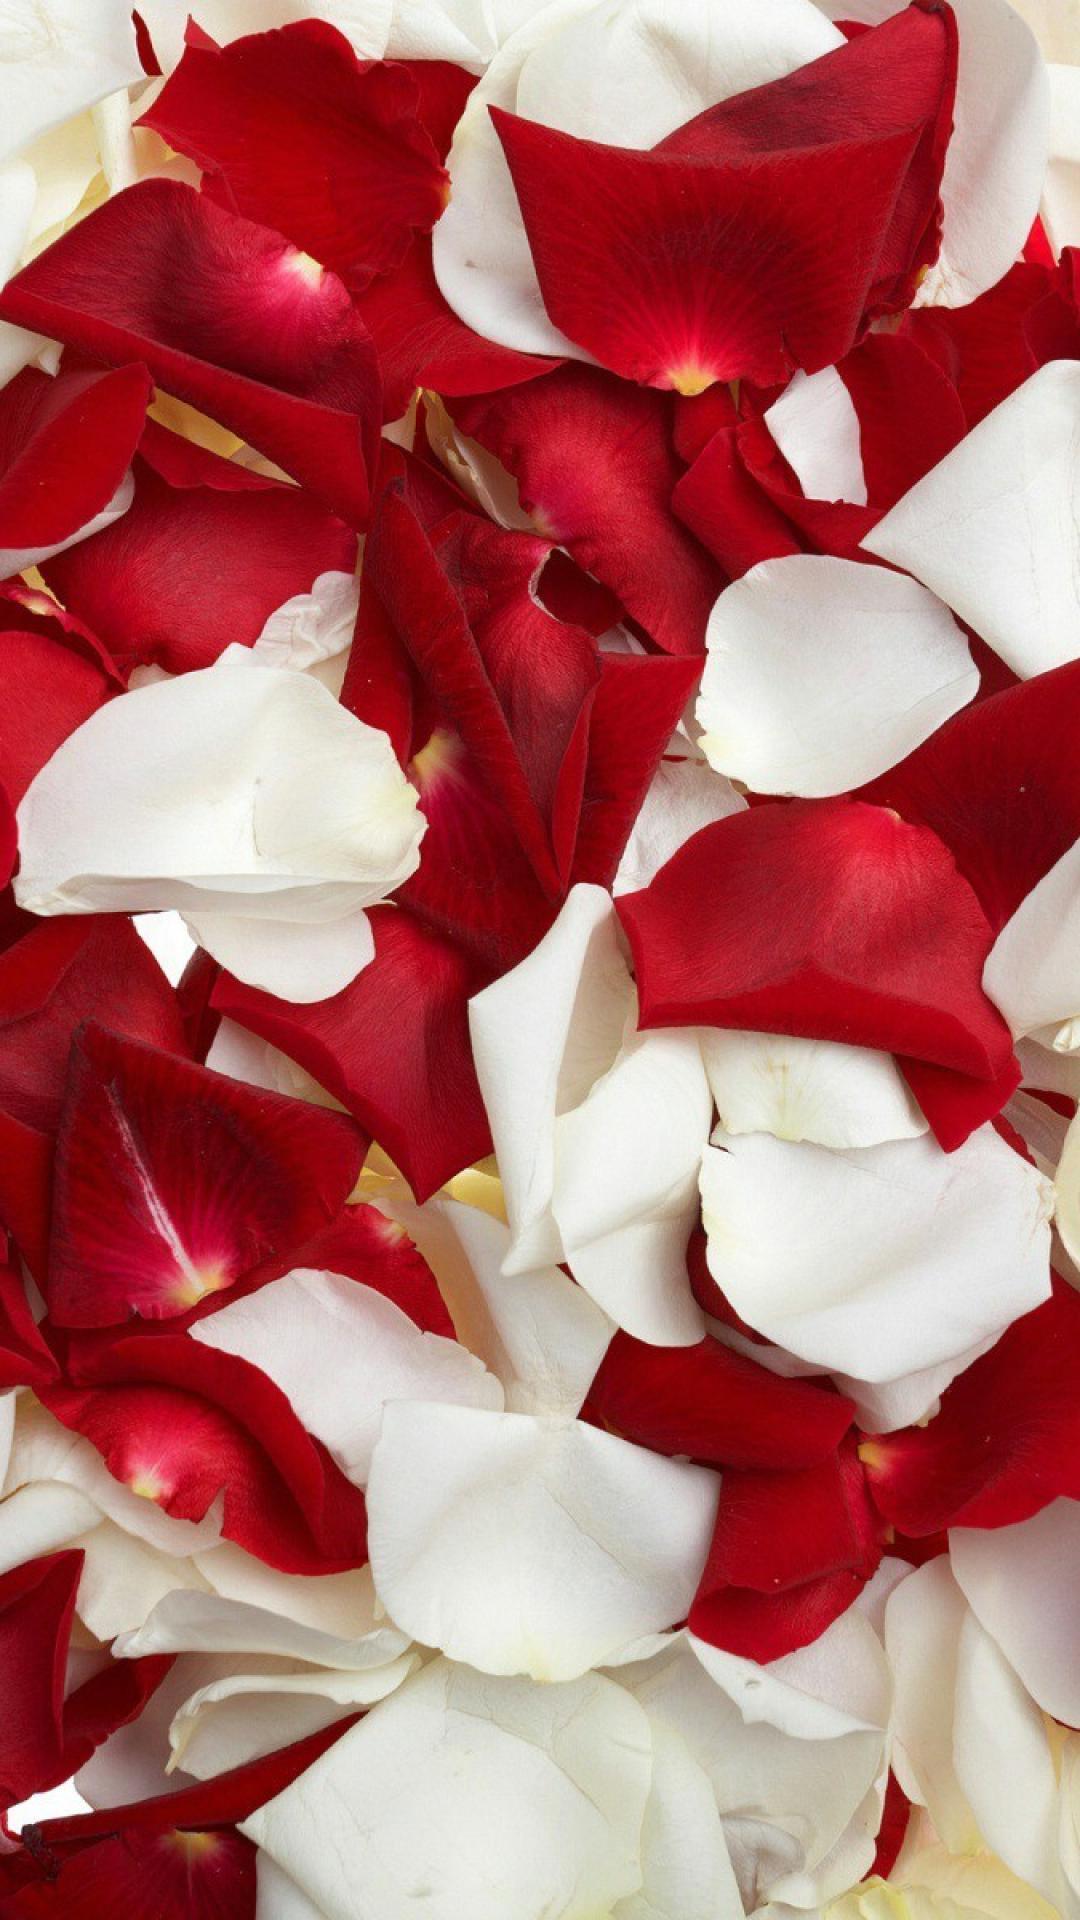 Red white rose petals wallpaper